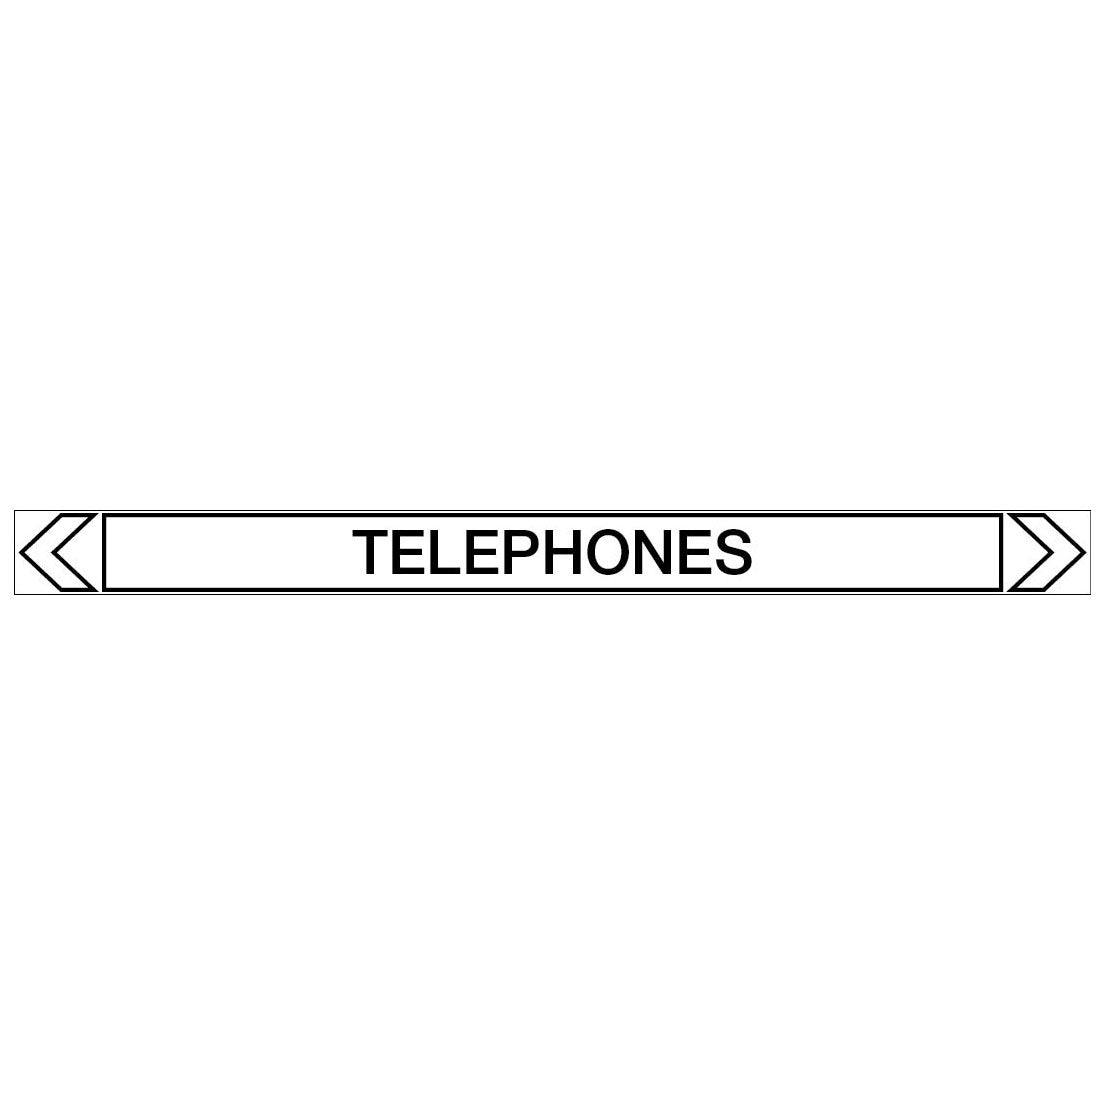 Communications - Telephones - Pipe Marker Sticker